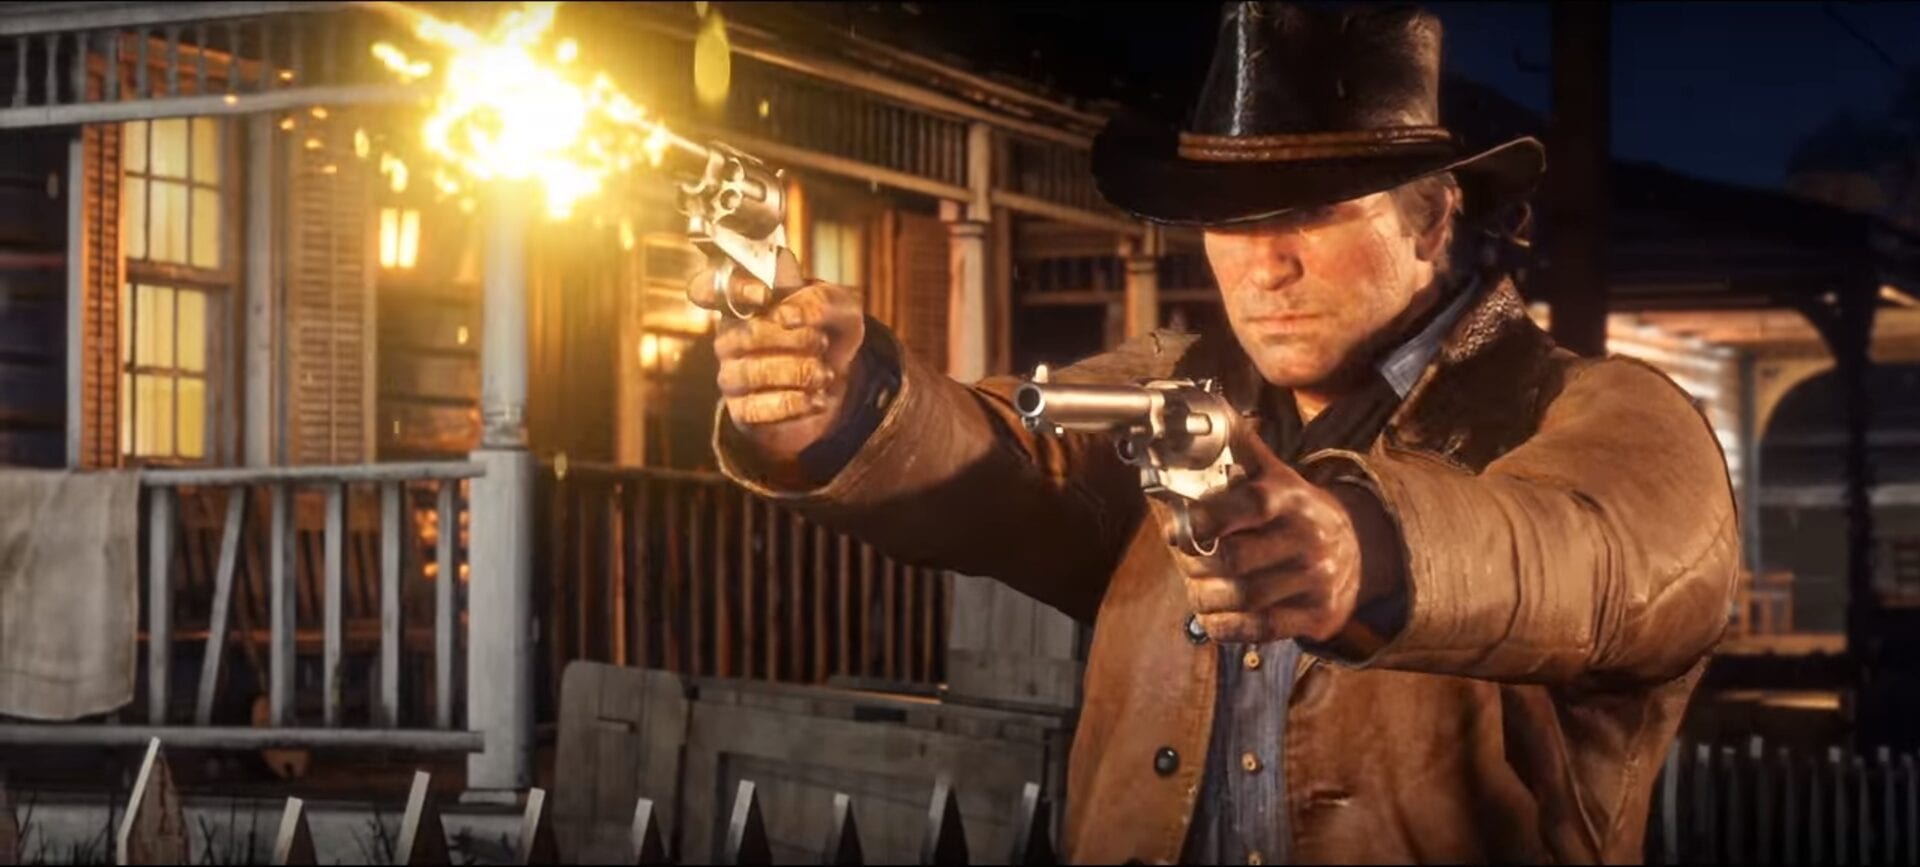 PSN Deals: Weekend Deals Include Red Dead Redemption 2, Nioh, World War Z and More